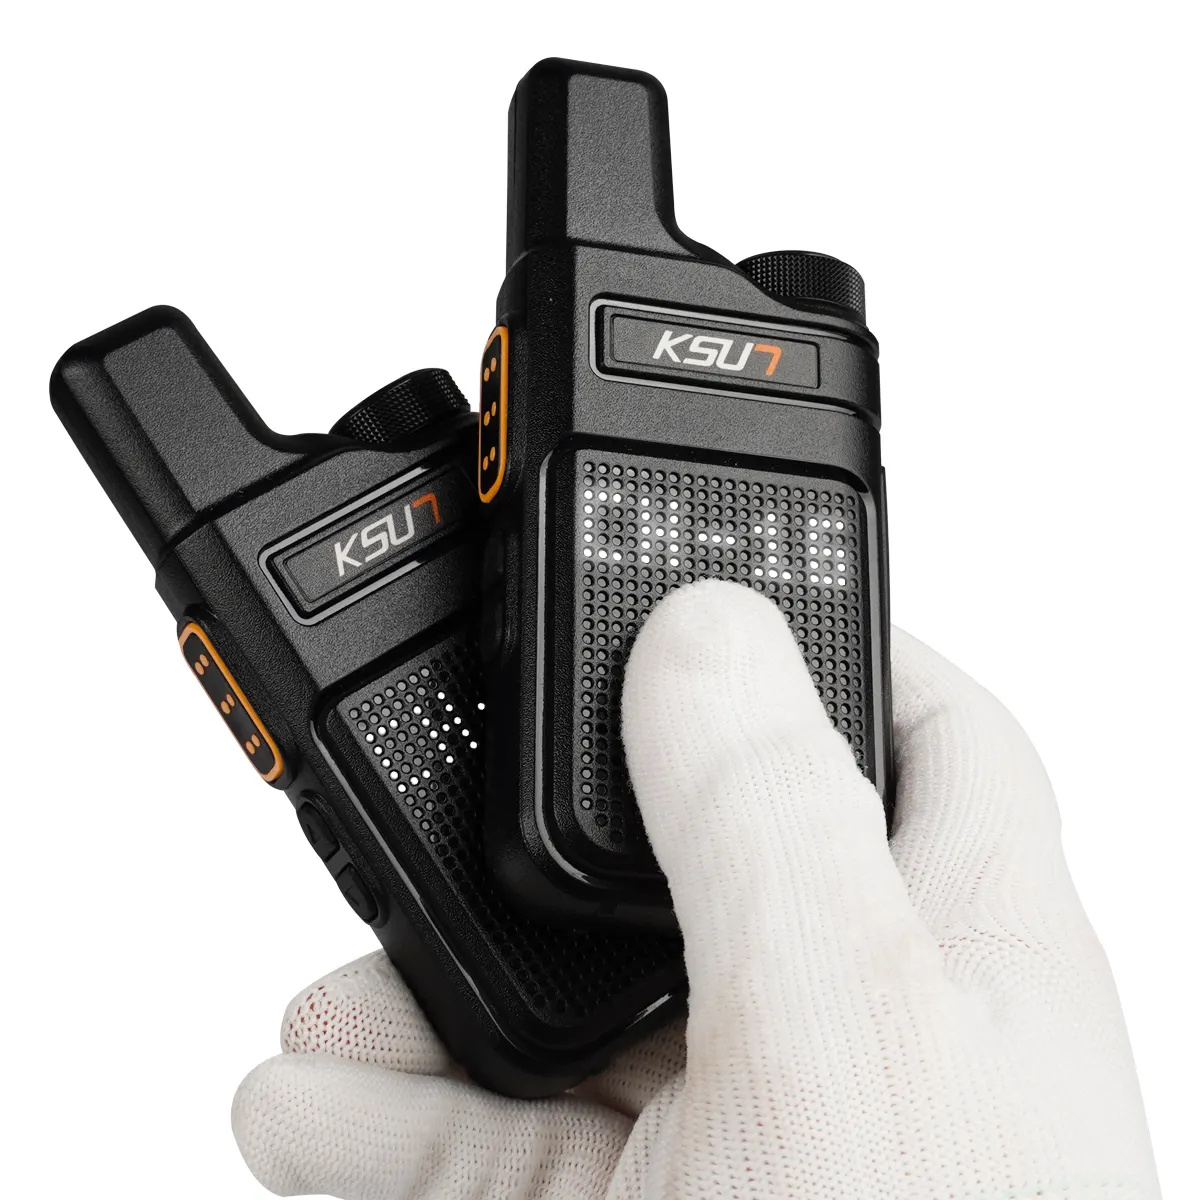 PMR 446 Walkie Talkie taşınabilir Mini iletişim radyo Pro Walkie Talkie iki yönlü radyo alıcı-verici KSUT M6 kalite